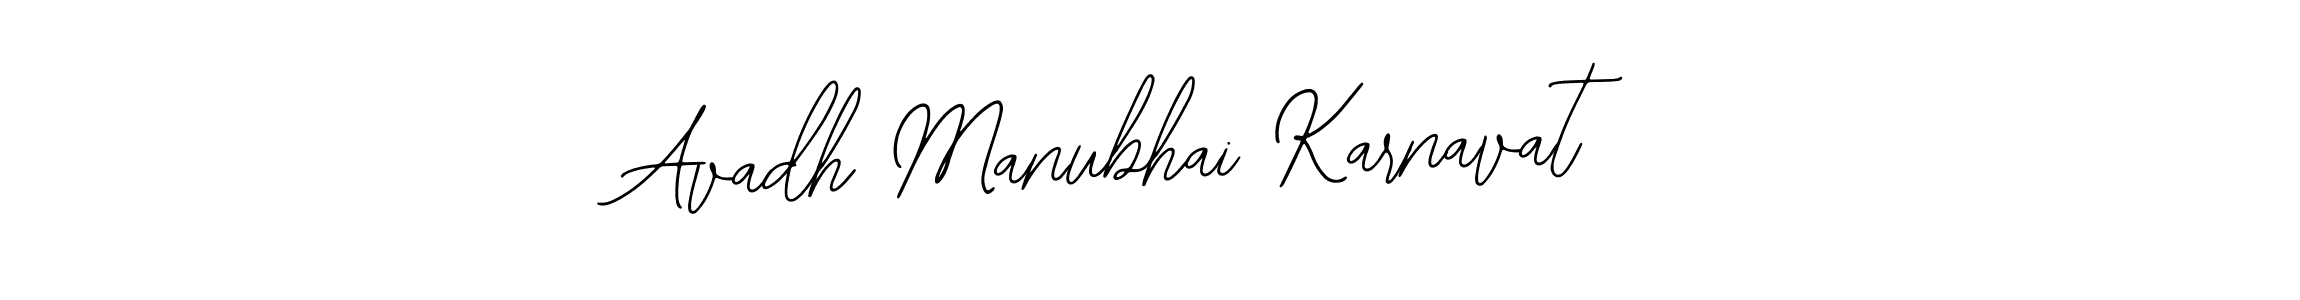 How to Draw Avadh Manubhai Karnavat signature style? Bearetta-2O07w is a latest design signature styles for name Avadh Manubhai Karnavat. Avadh Manubhai Karnavat signature style 12 images and pictures png